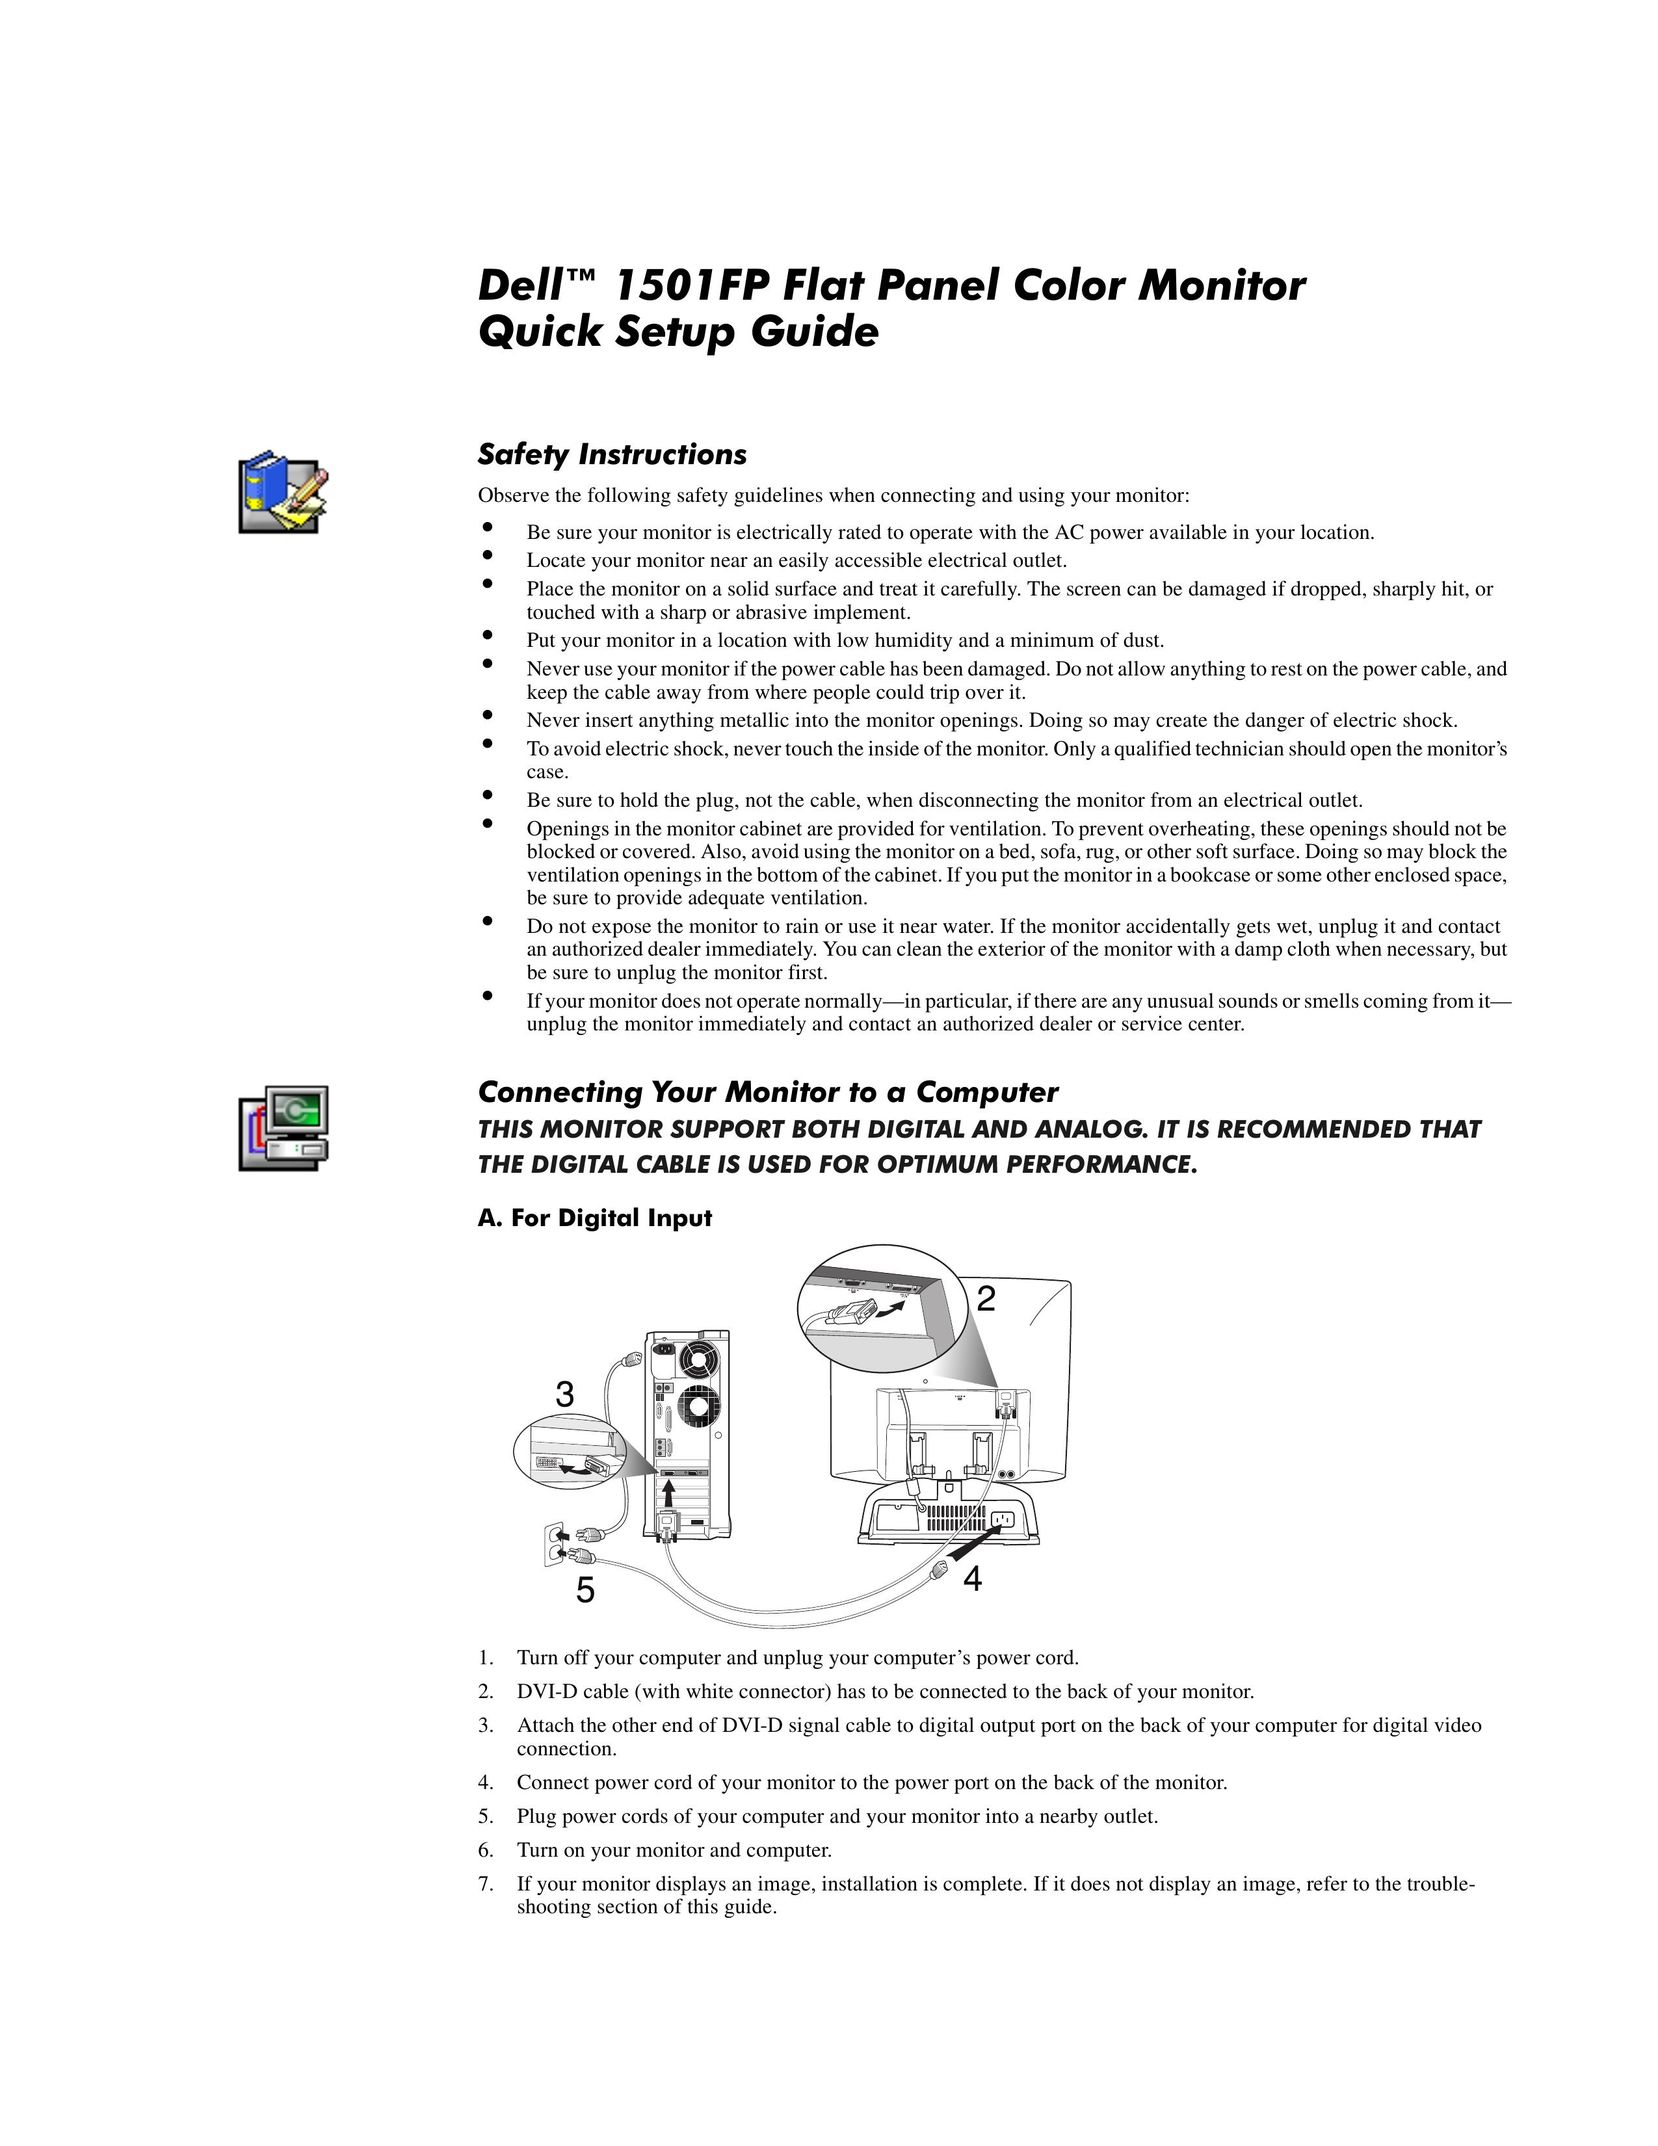 Dell 1501FP Computer Monitor User Manual